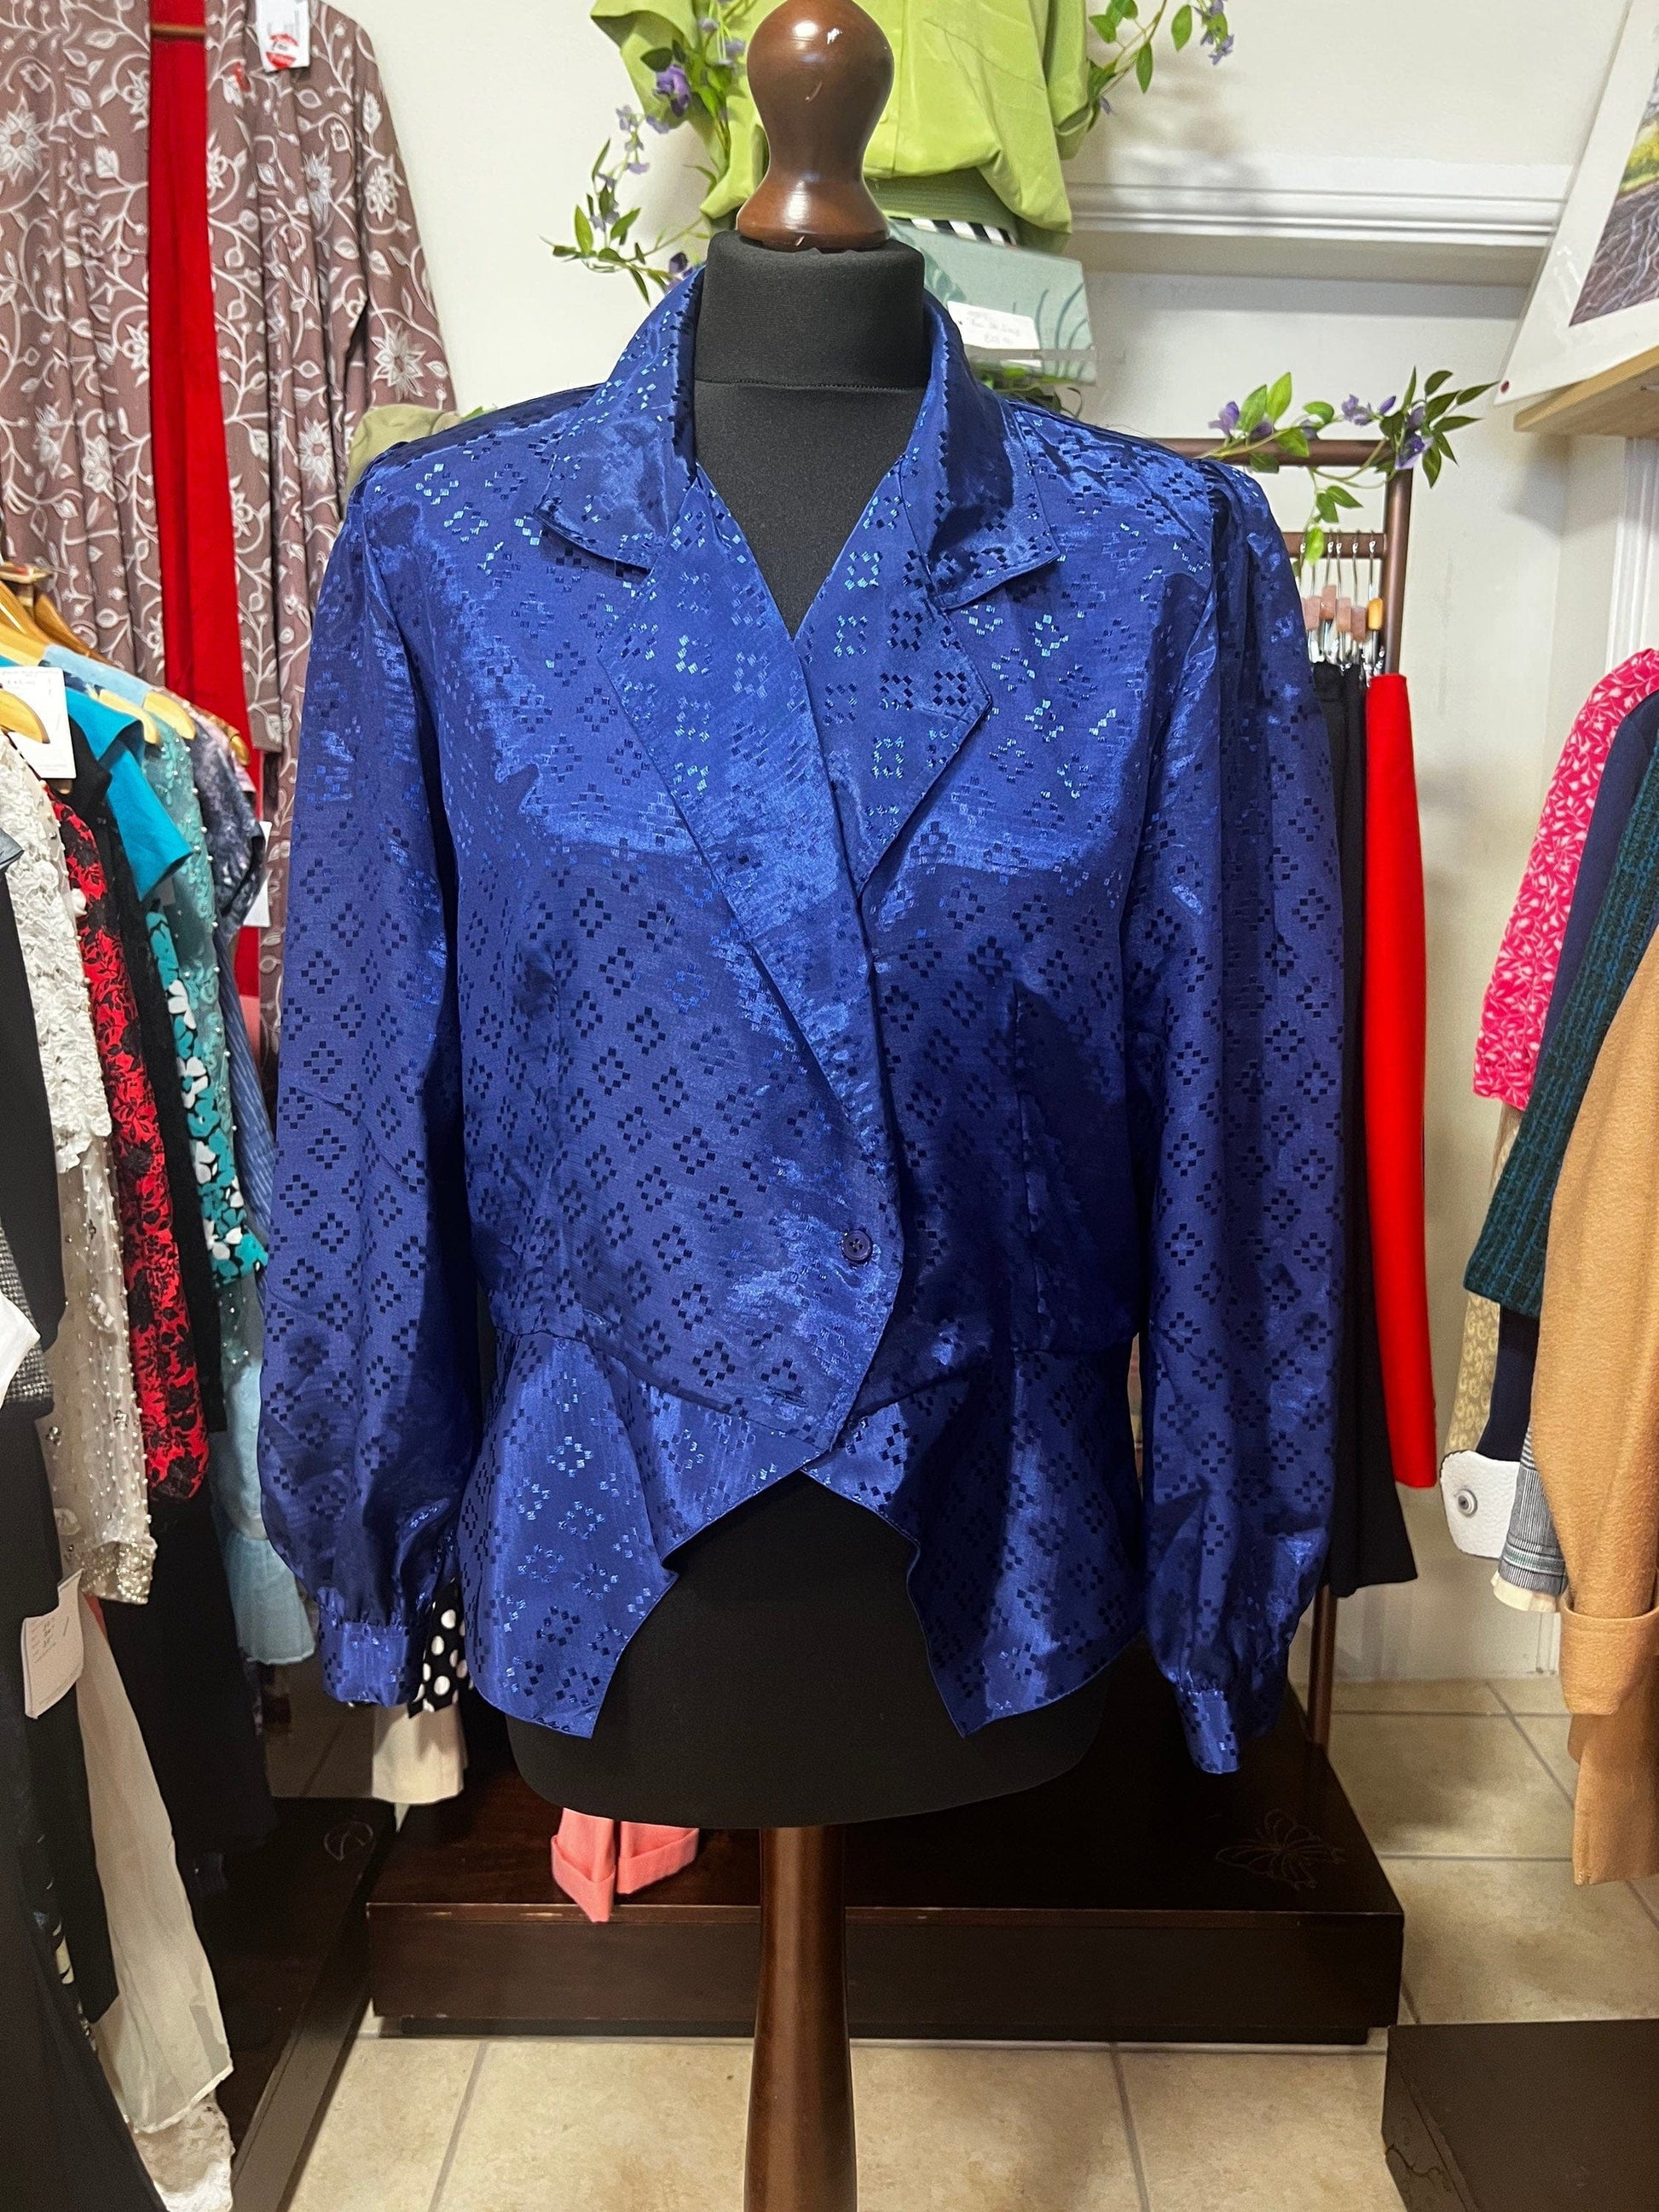 Vintage blouse blue shiny peplum Blouse leaf print swirl Shirt Length Electric Blue UK Size 14